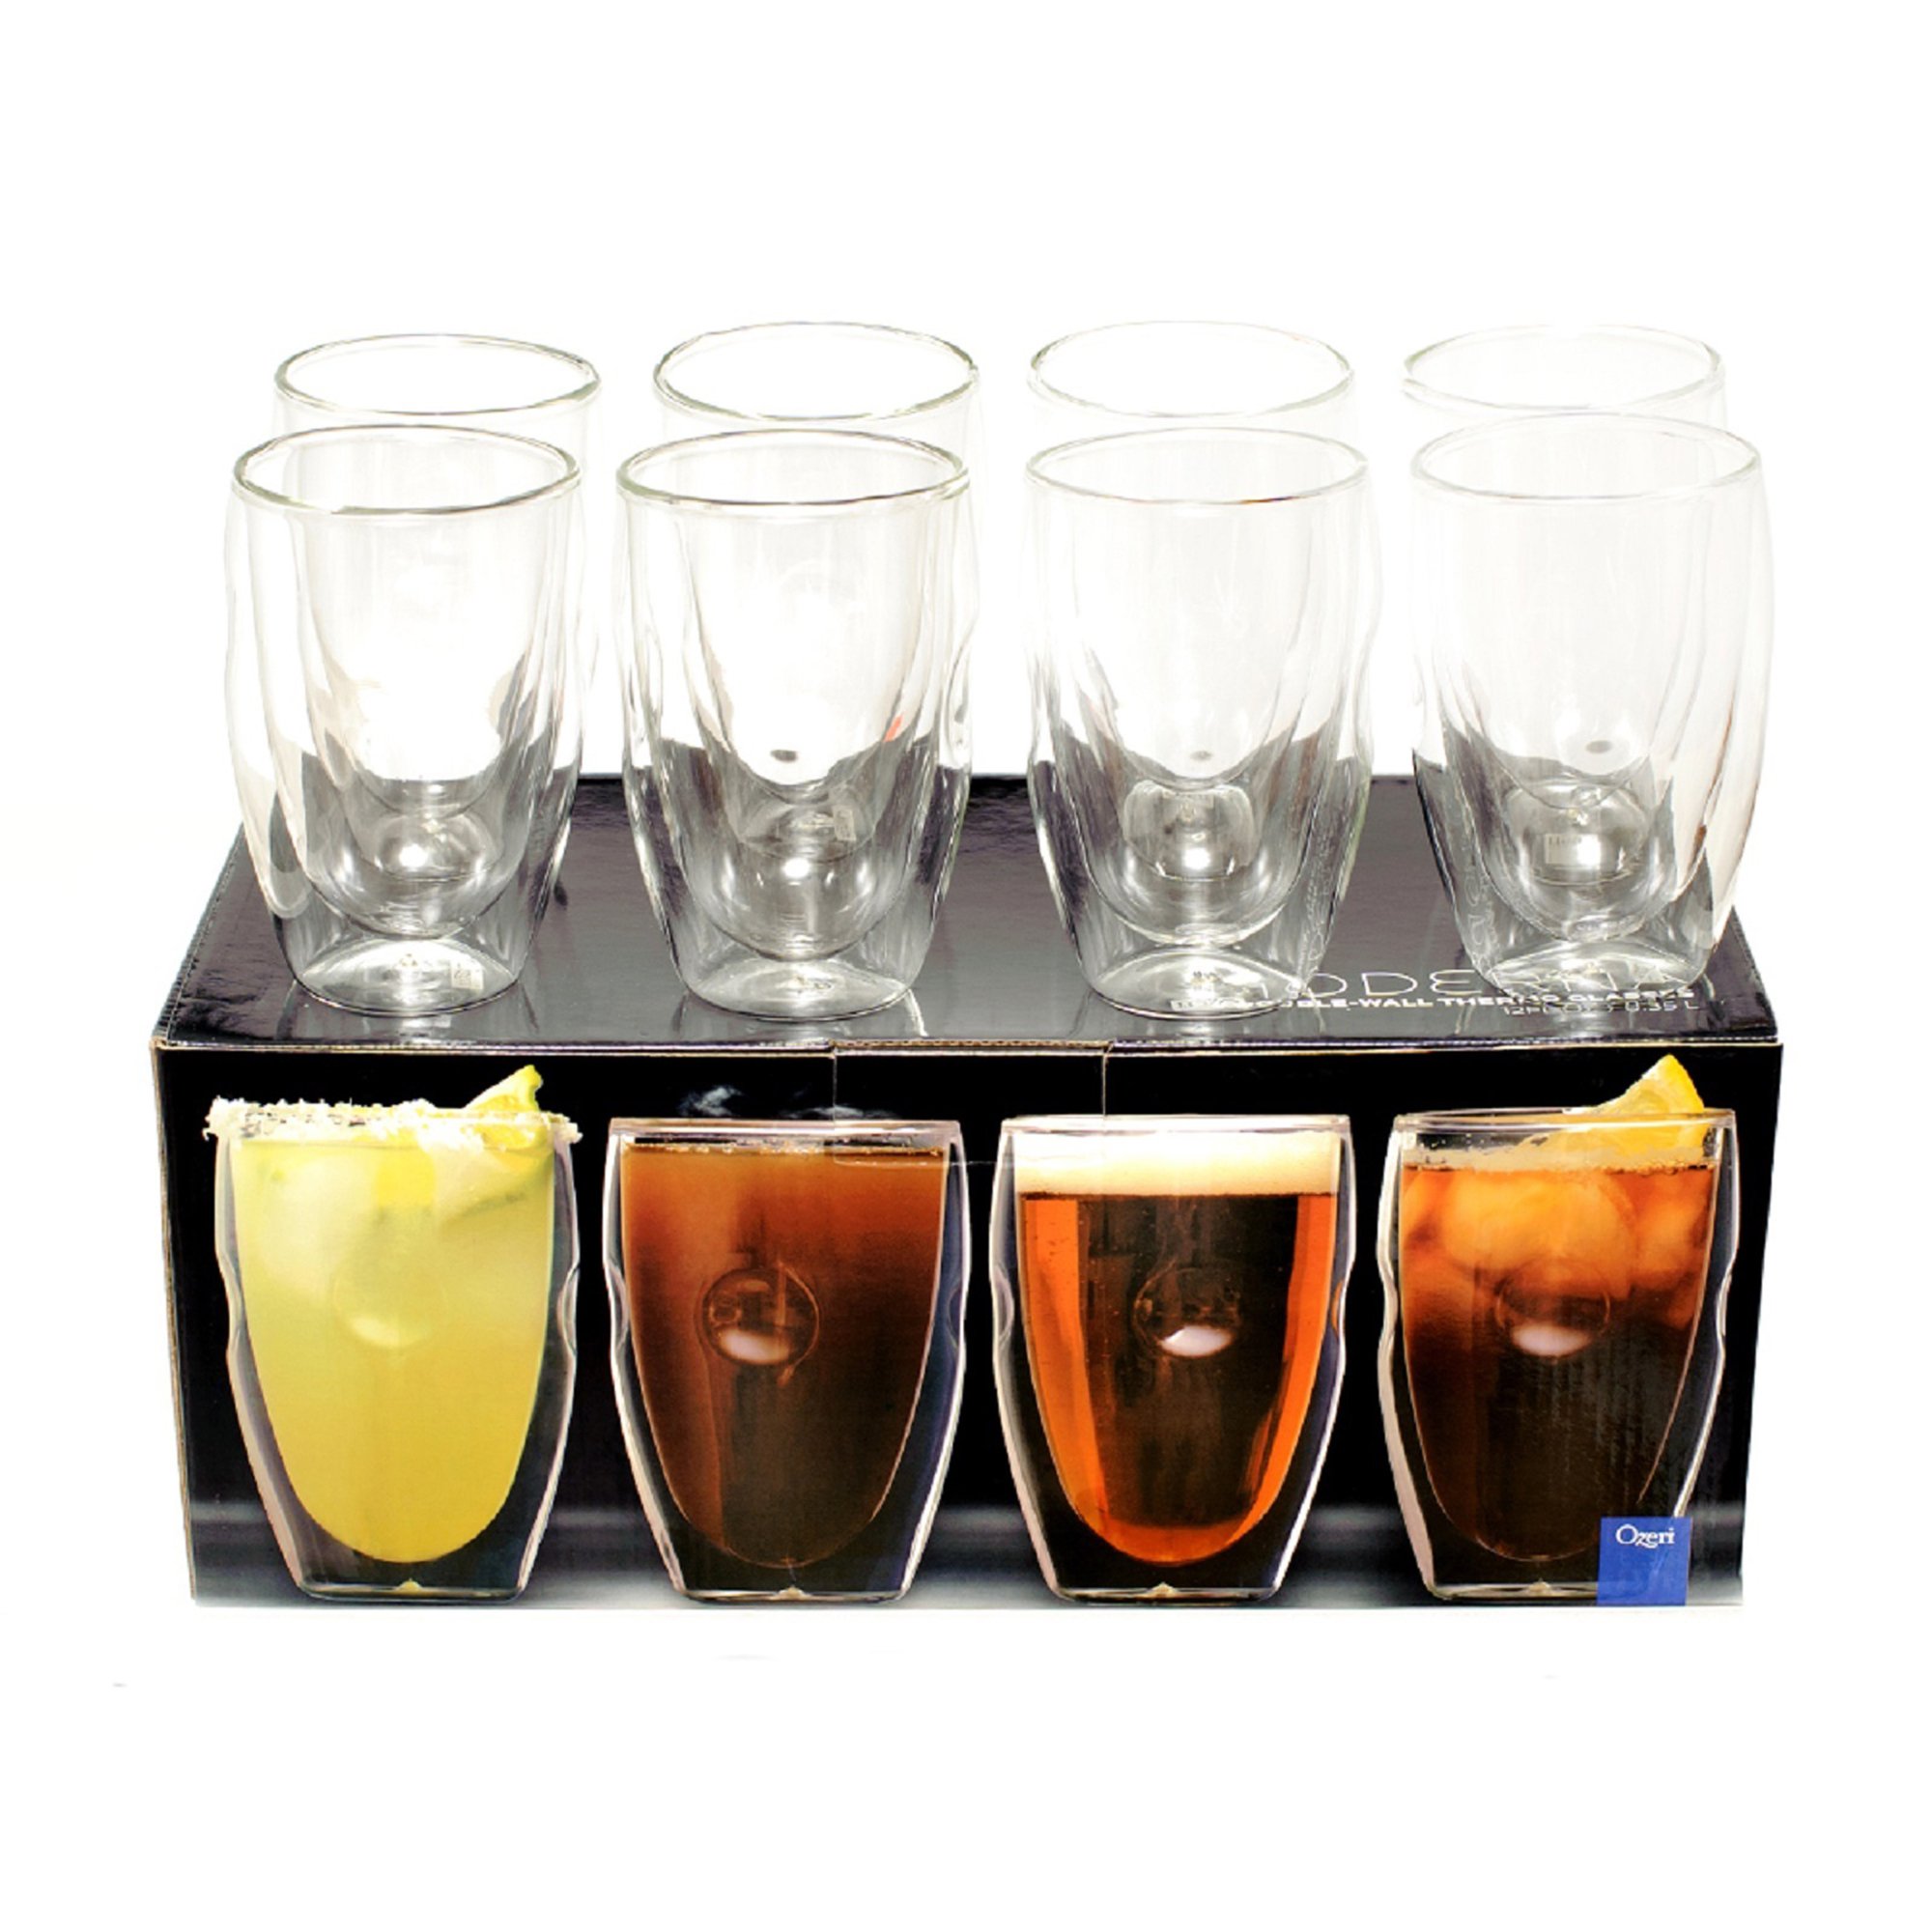 Ozeri Moderna Artisan Series Double Wall 12 oz Beverage Glasses - Set of 8 Drinking Glasses